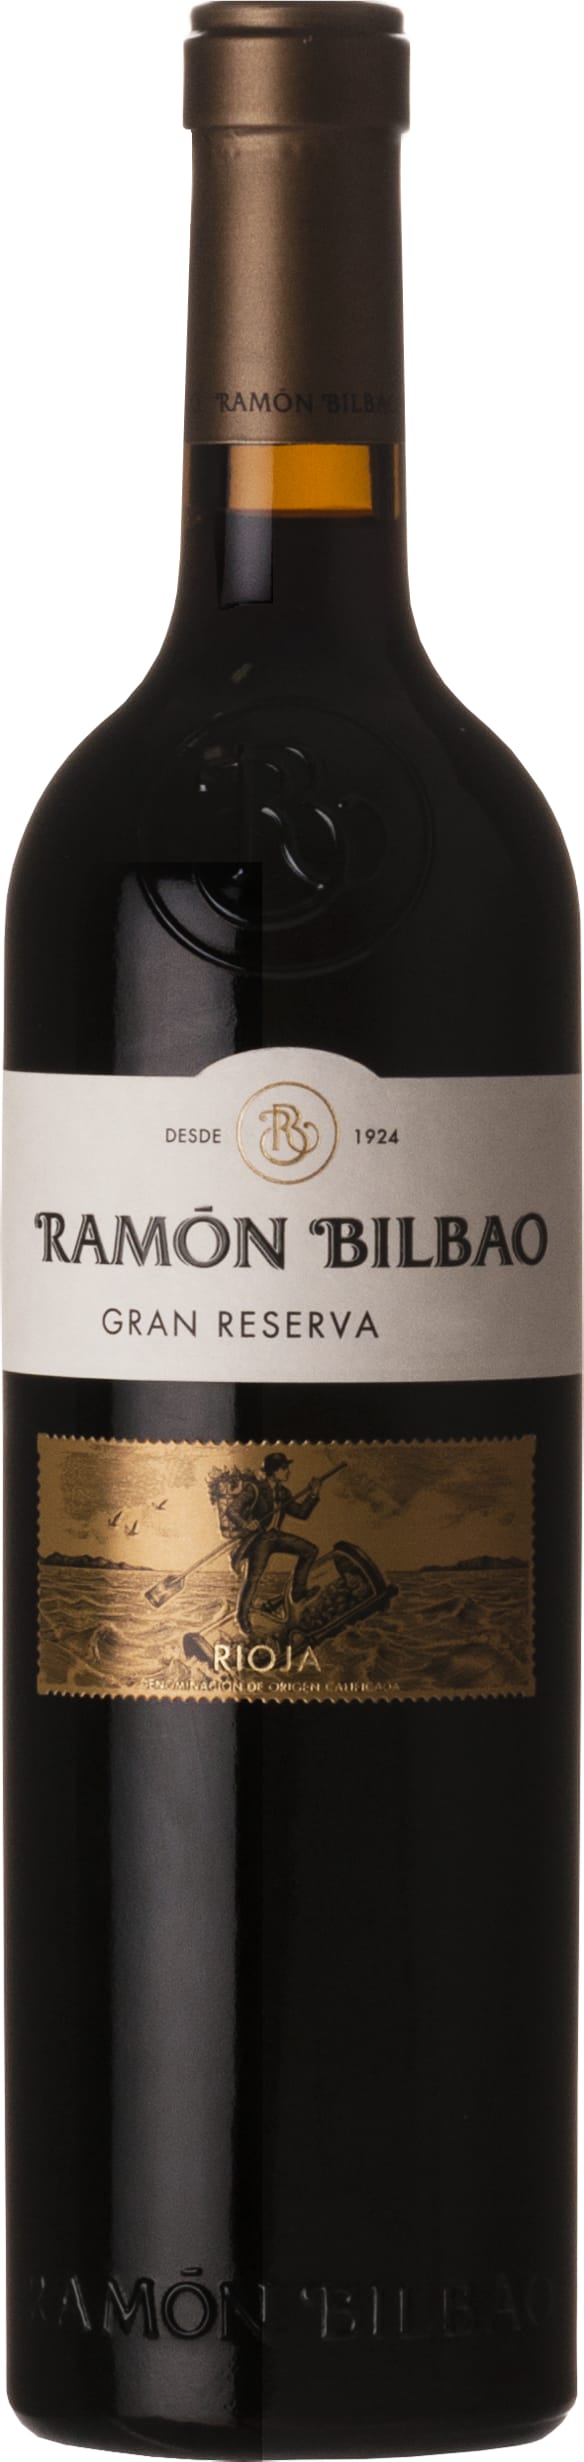 Ramon Bilbao Rioja Gran Reserva 2015 75cl - Buy Ramon Bilbao Wines from GREAT WINES DIRECT wine shop